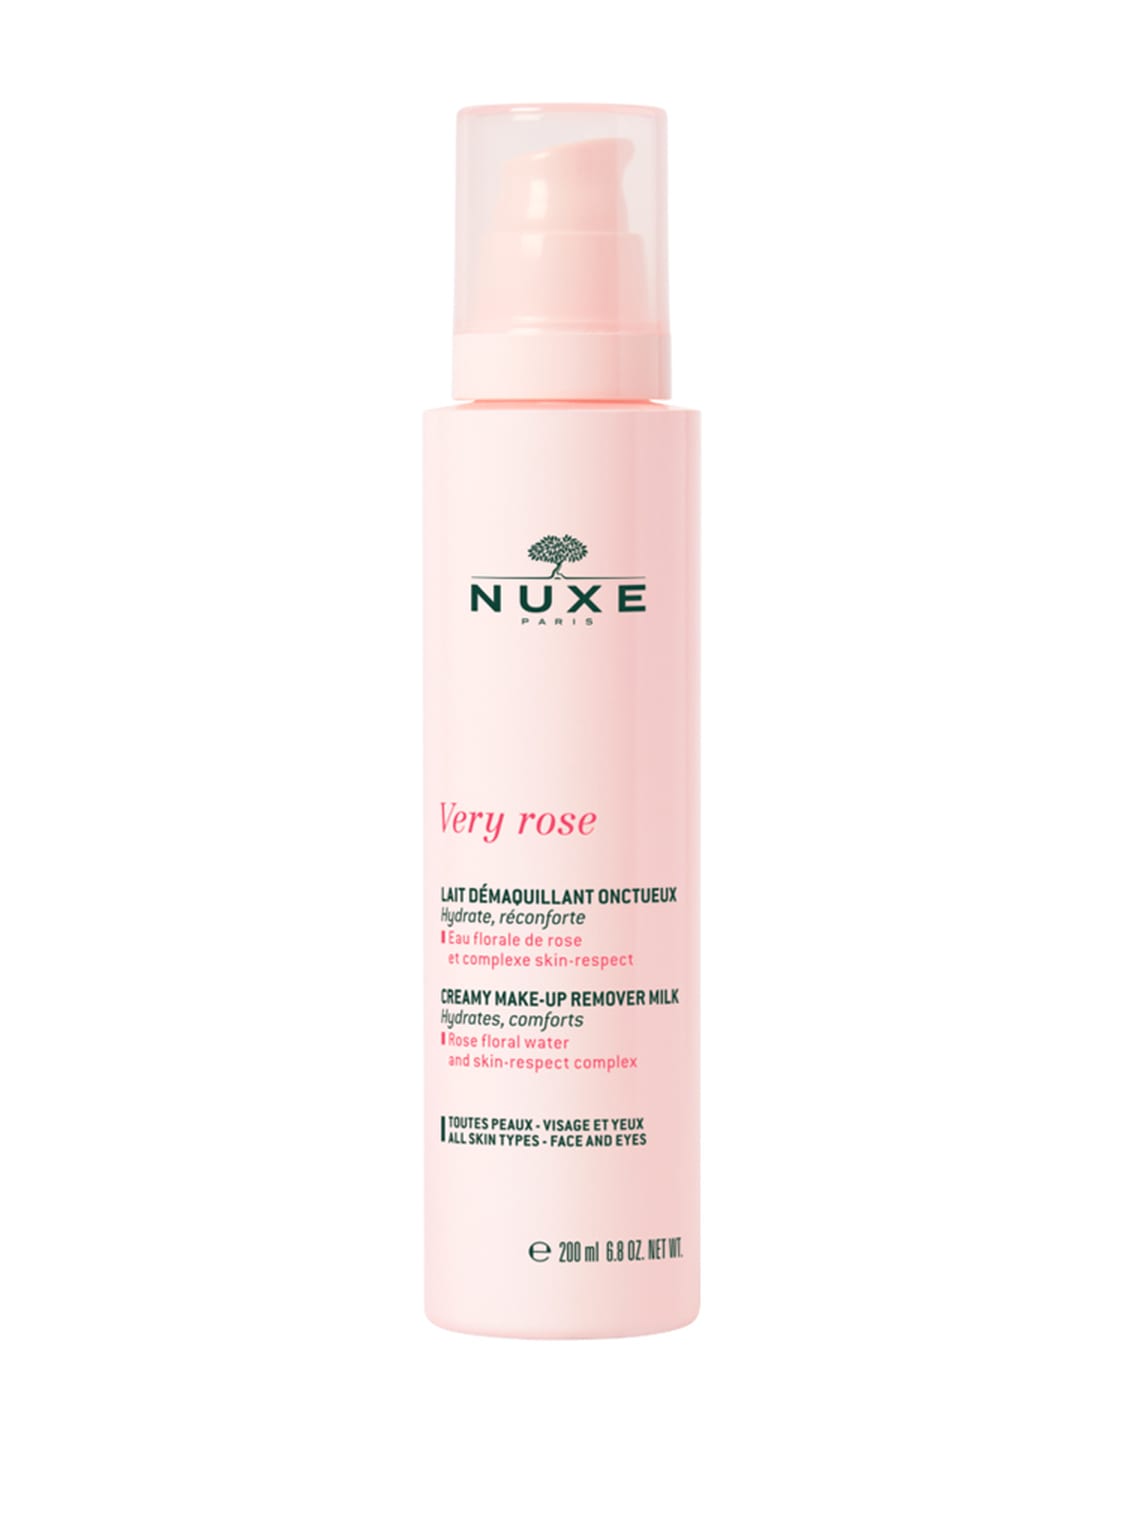 Nuxe Very Rose Creamy Make-up Remover Milk 200 ml von NUXE